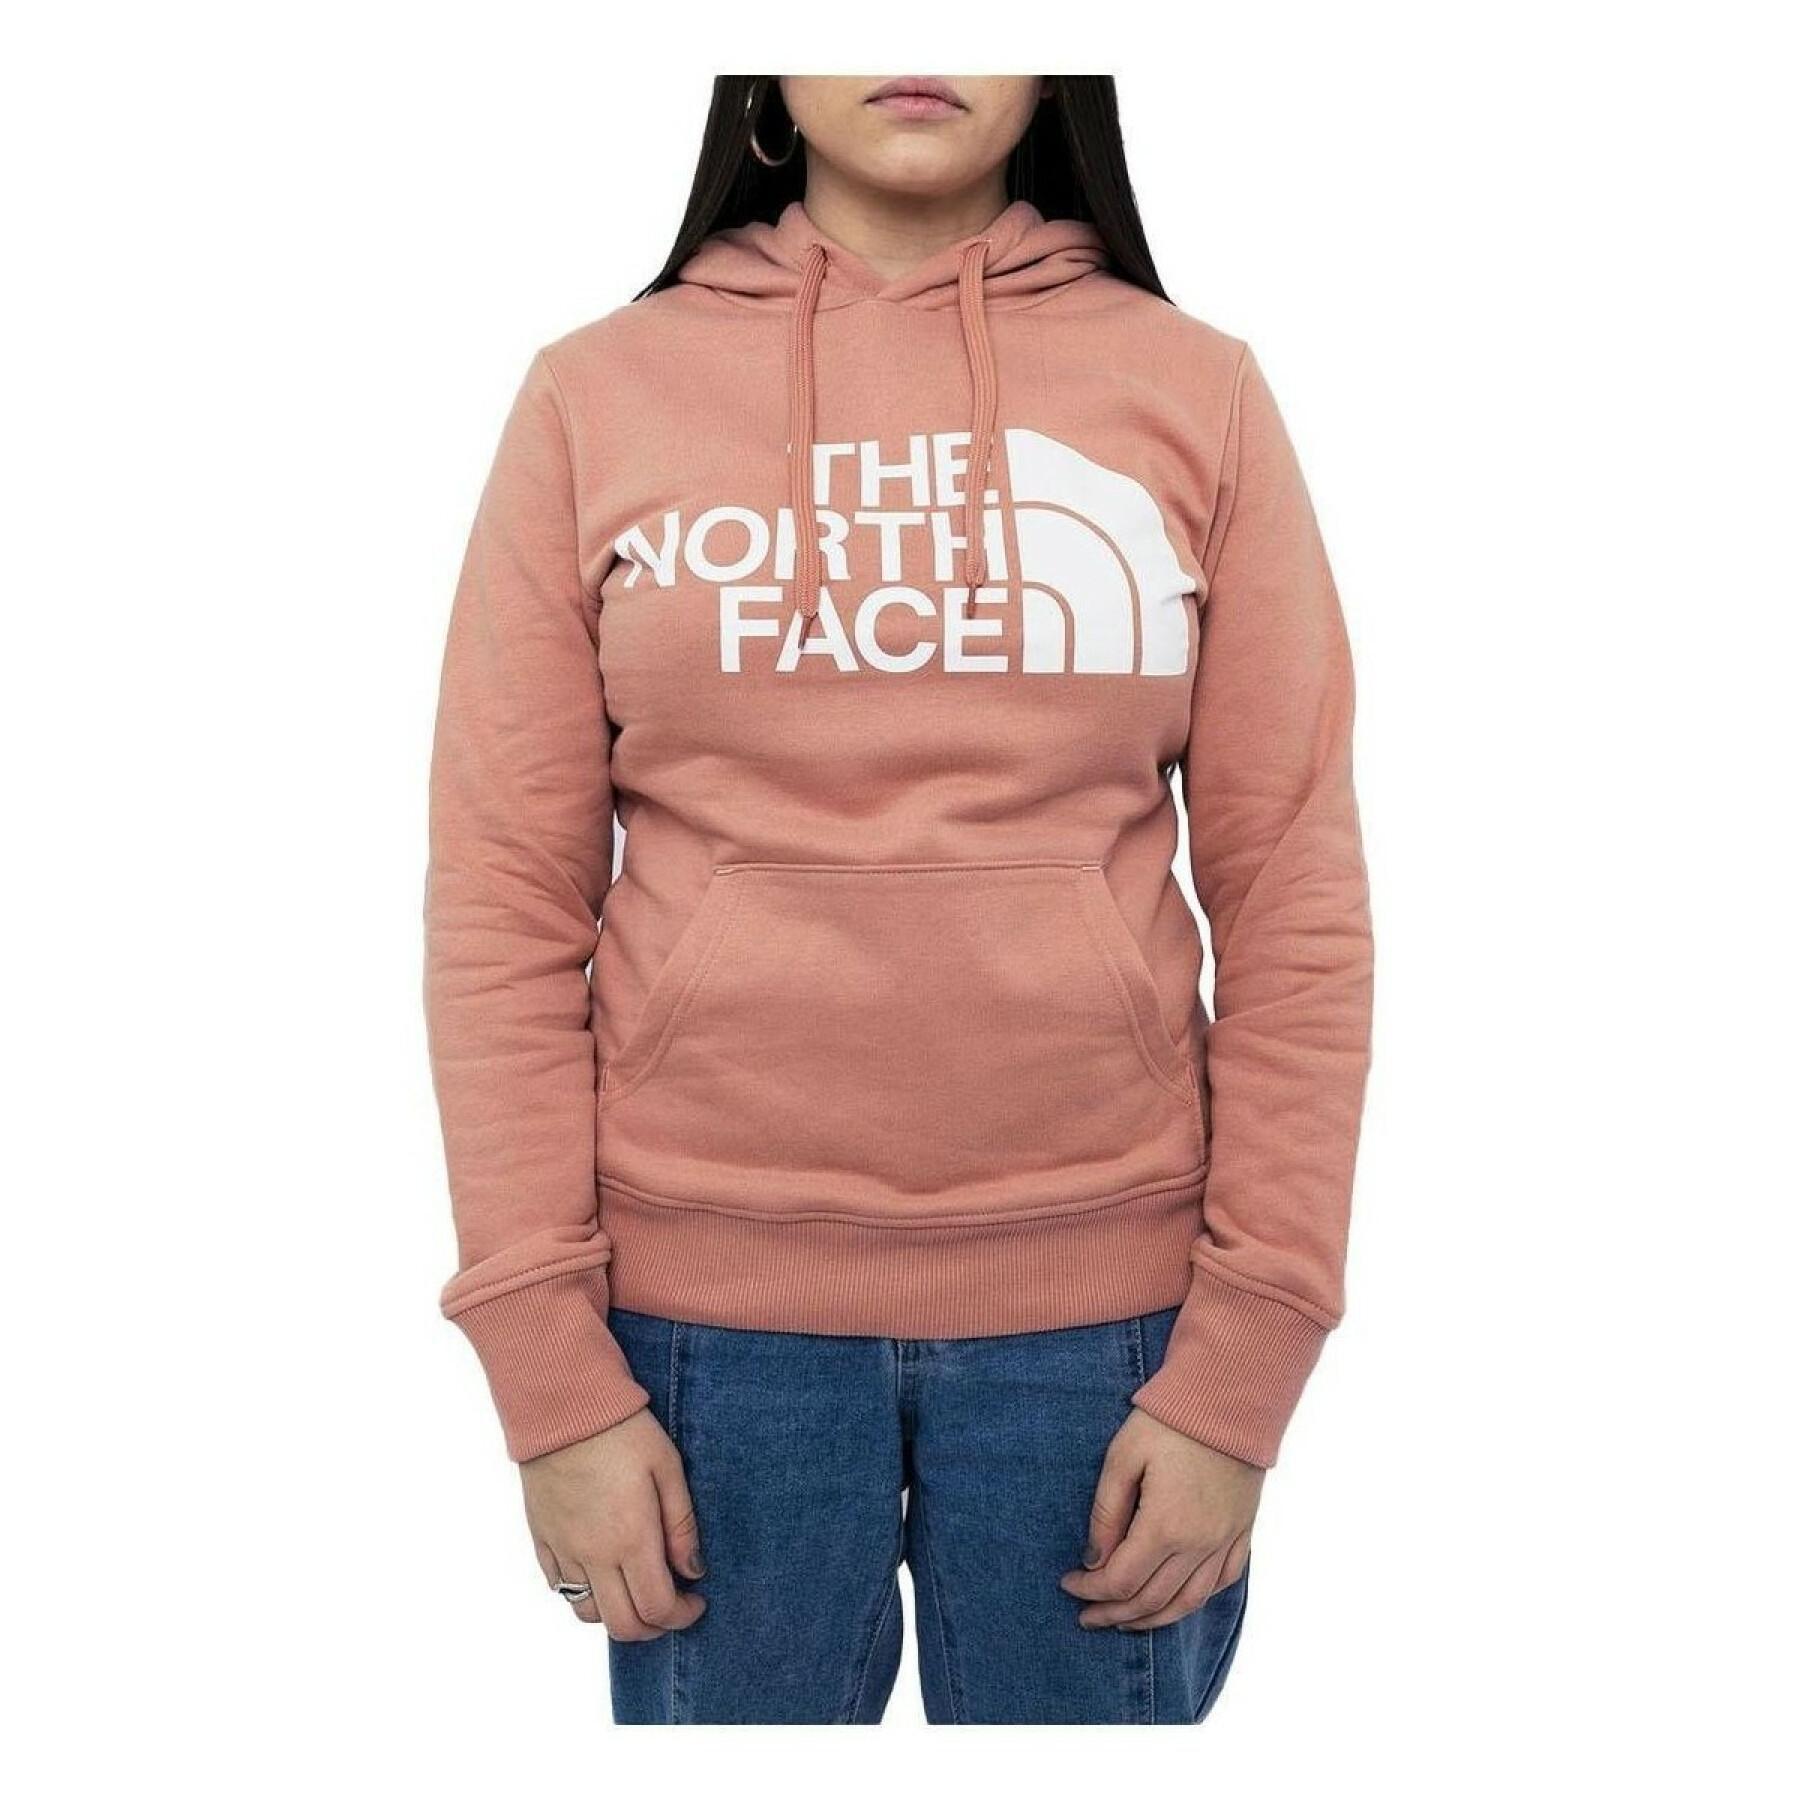 Dames sweatshirt The North Face Standard